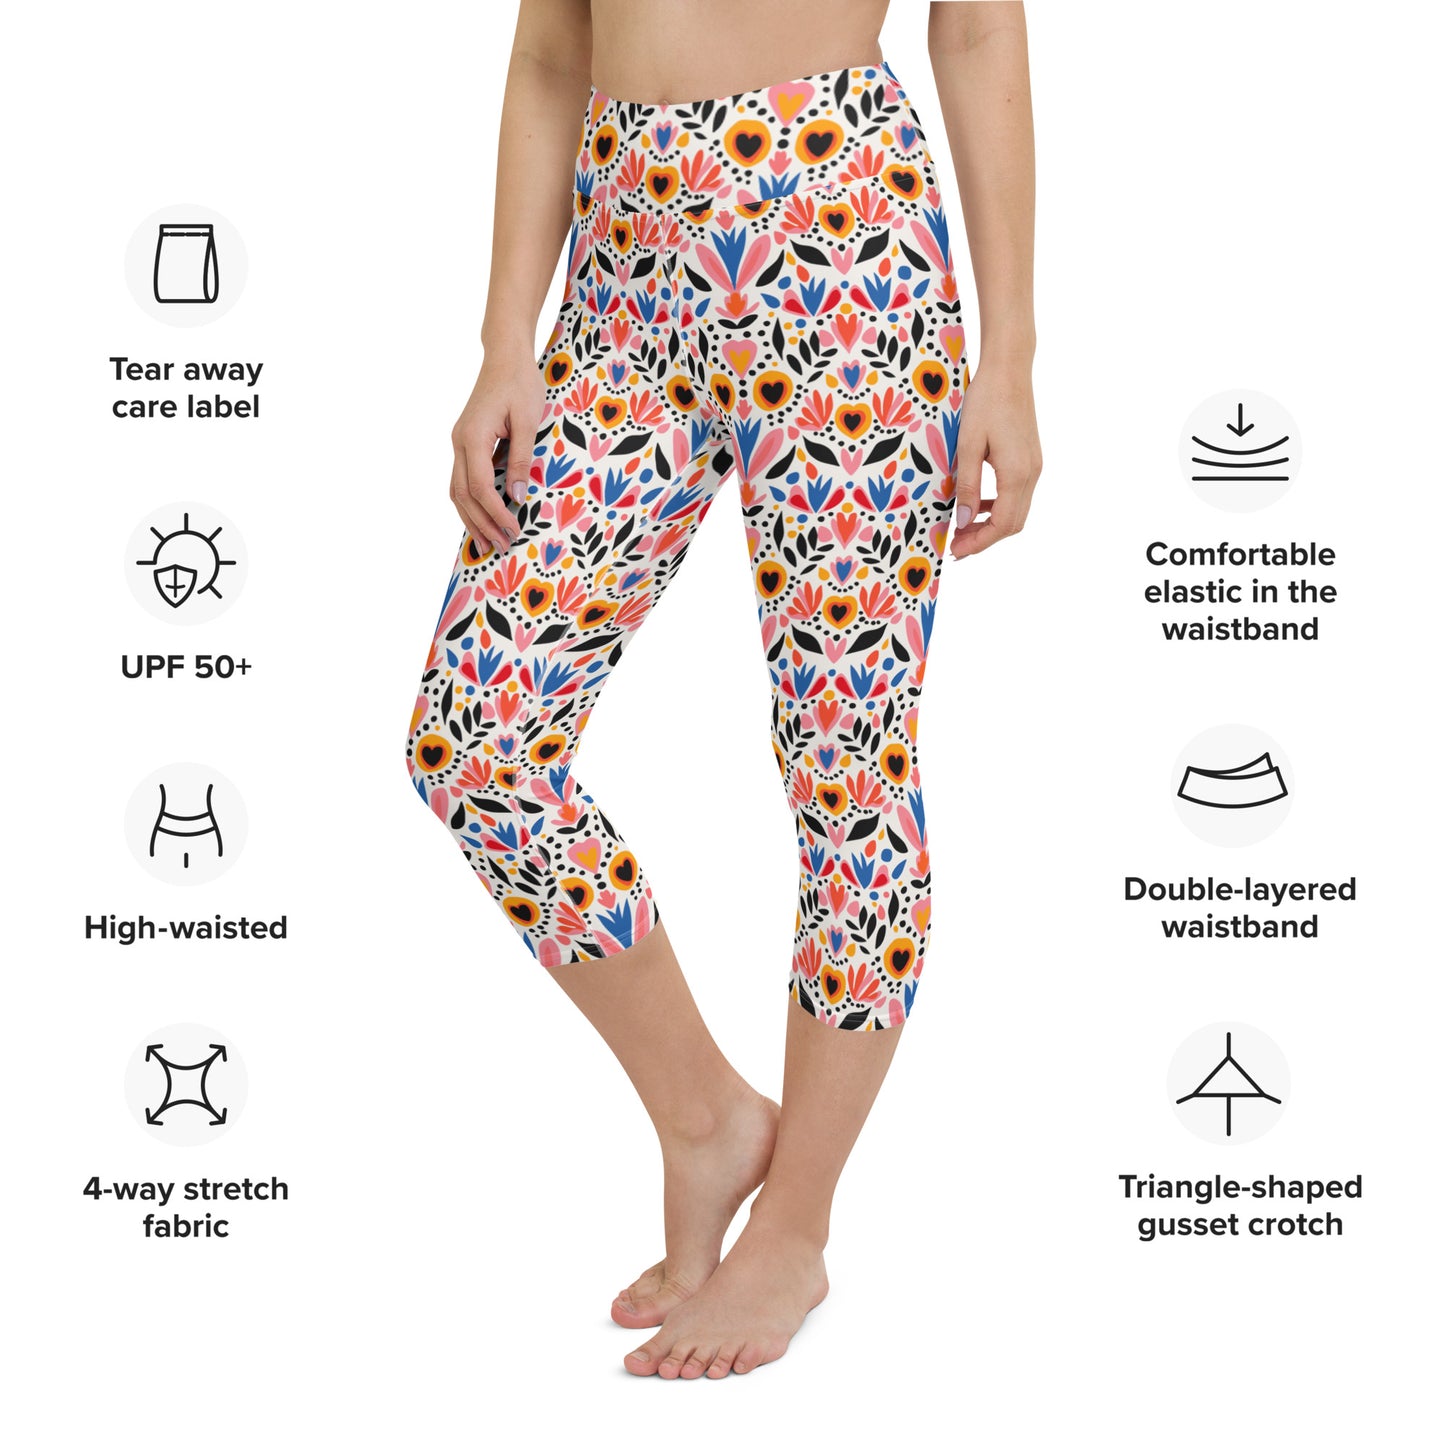 Alpen Tag Capri High Waist Yoga Leggings / Pants with Inside Pocket